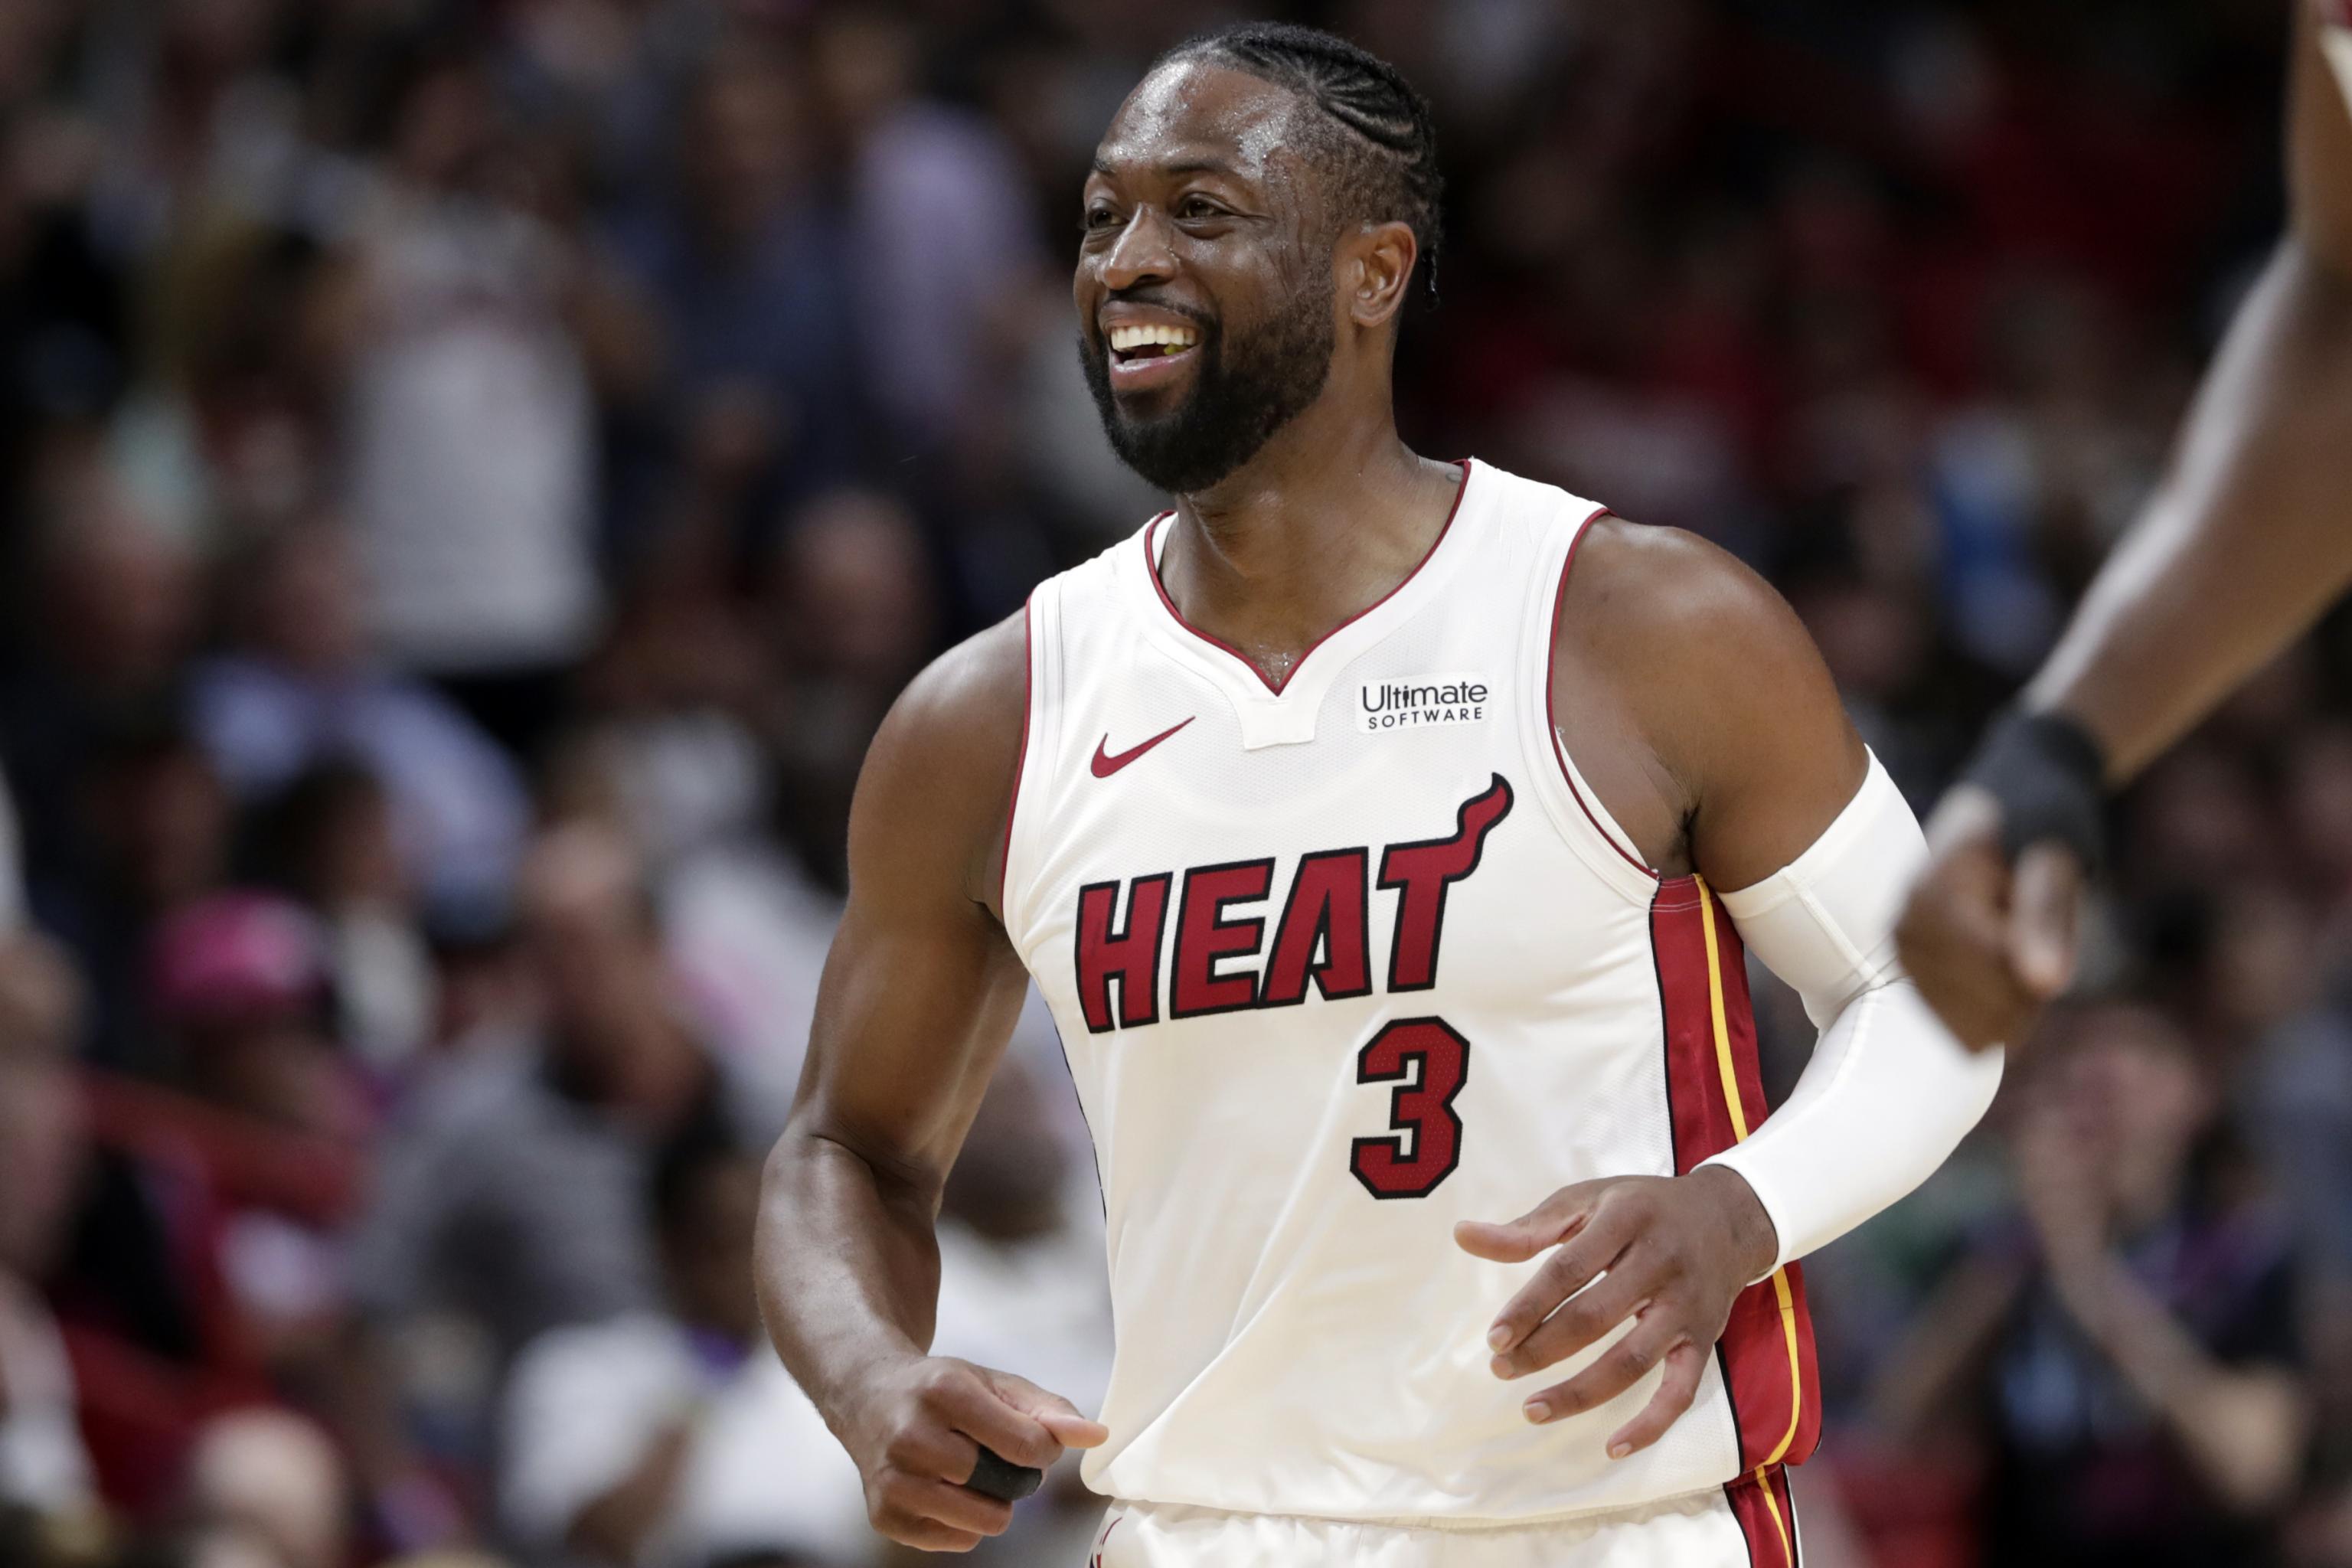 Miami Heat: Will Dwyane Wade pass Michael Jordan in blocks?